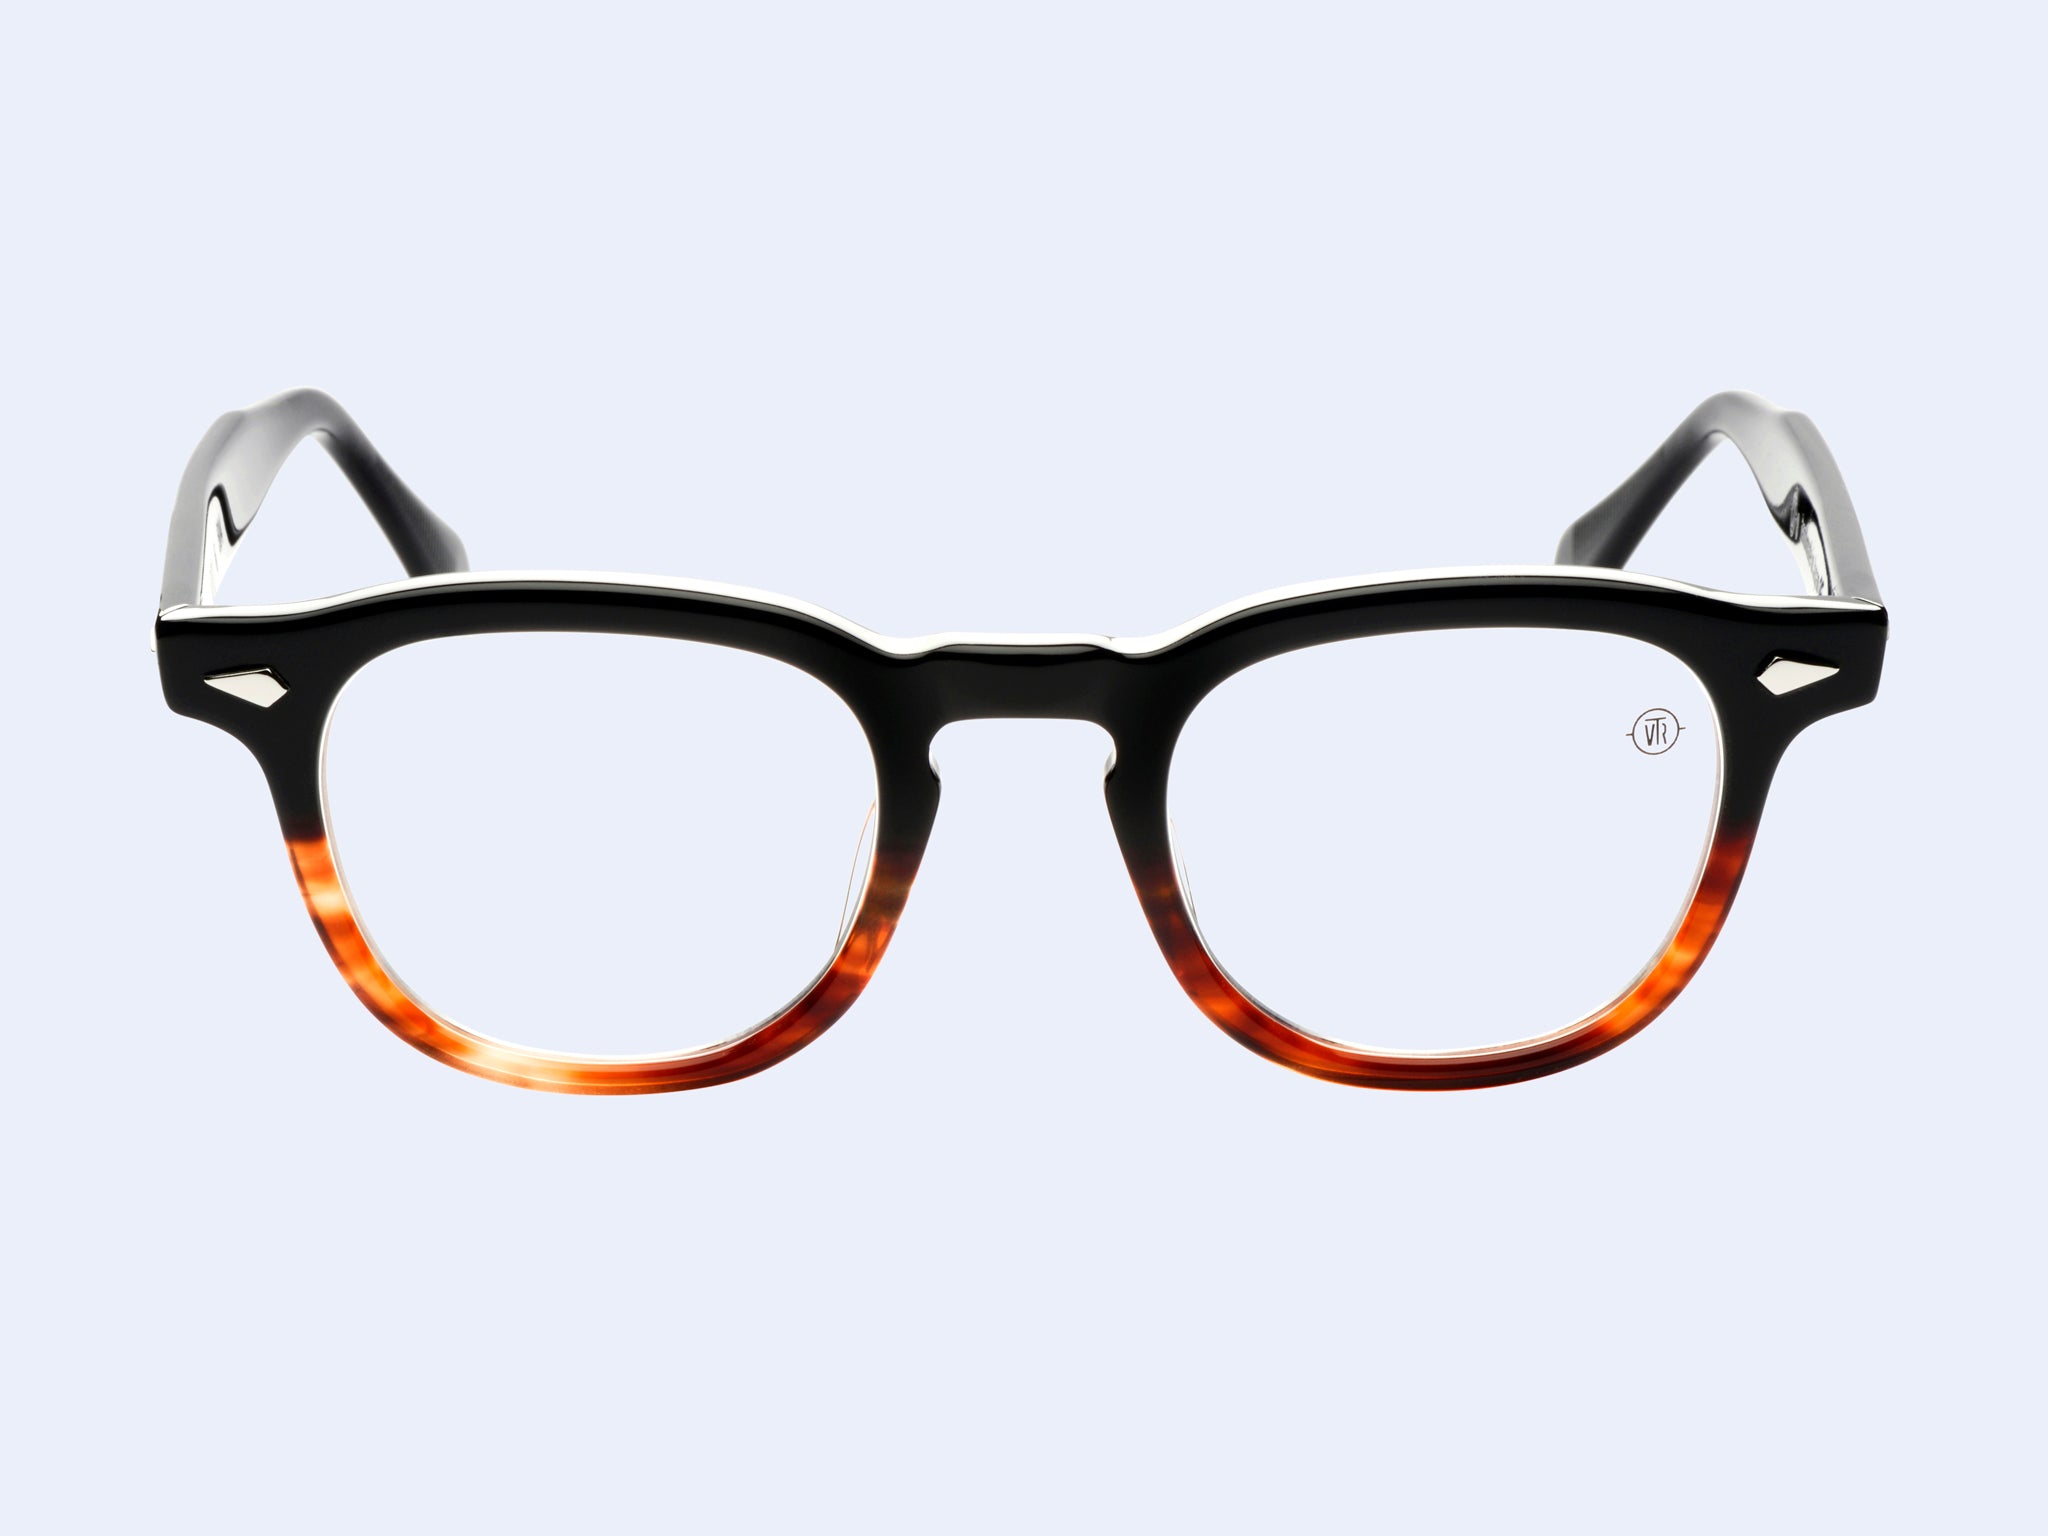 What makes TVR truly vintage eyewear revivalists?